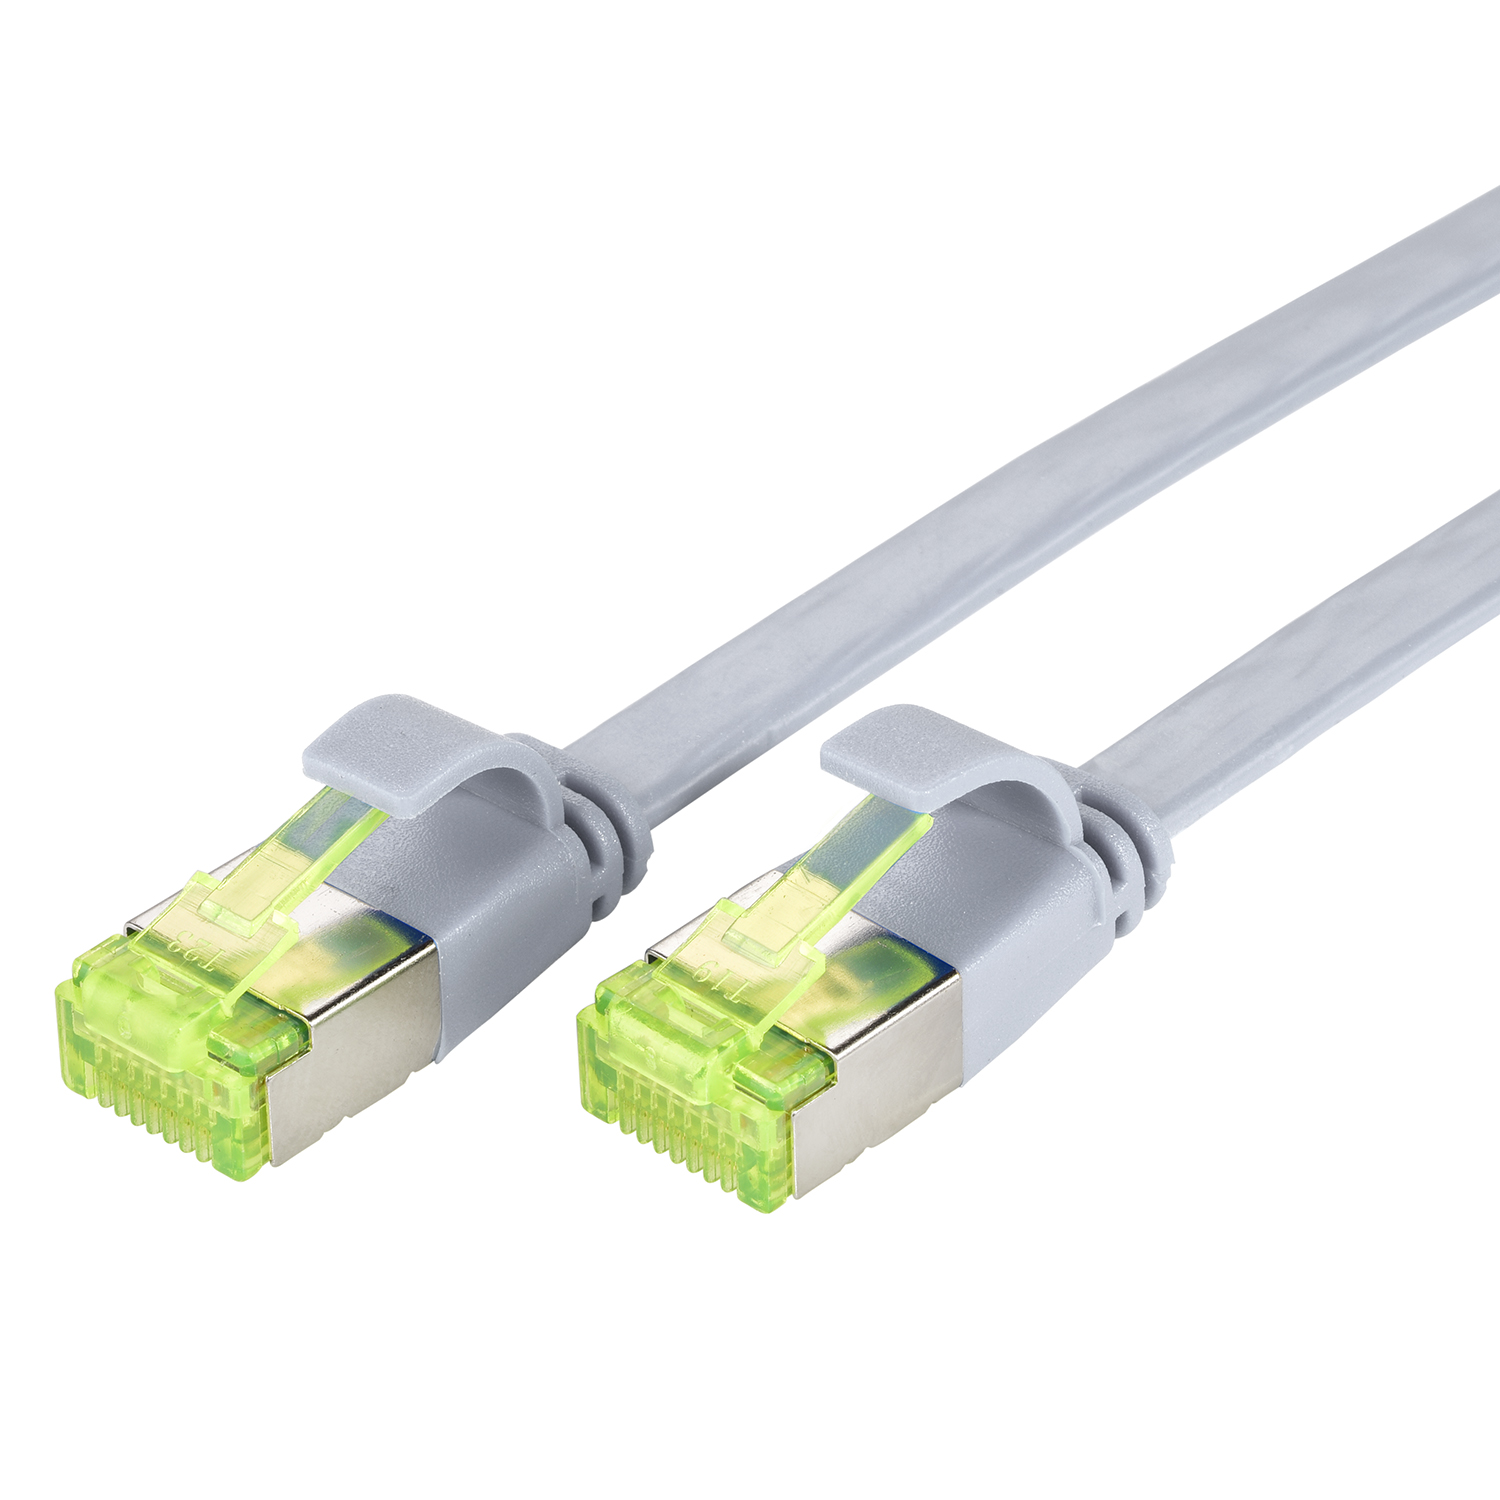 TPFNET 1m U/FTP 10 / Patchkabel grau, Flachkabel m 1 GBit, Netzwerkkabel